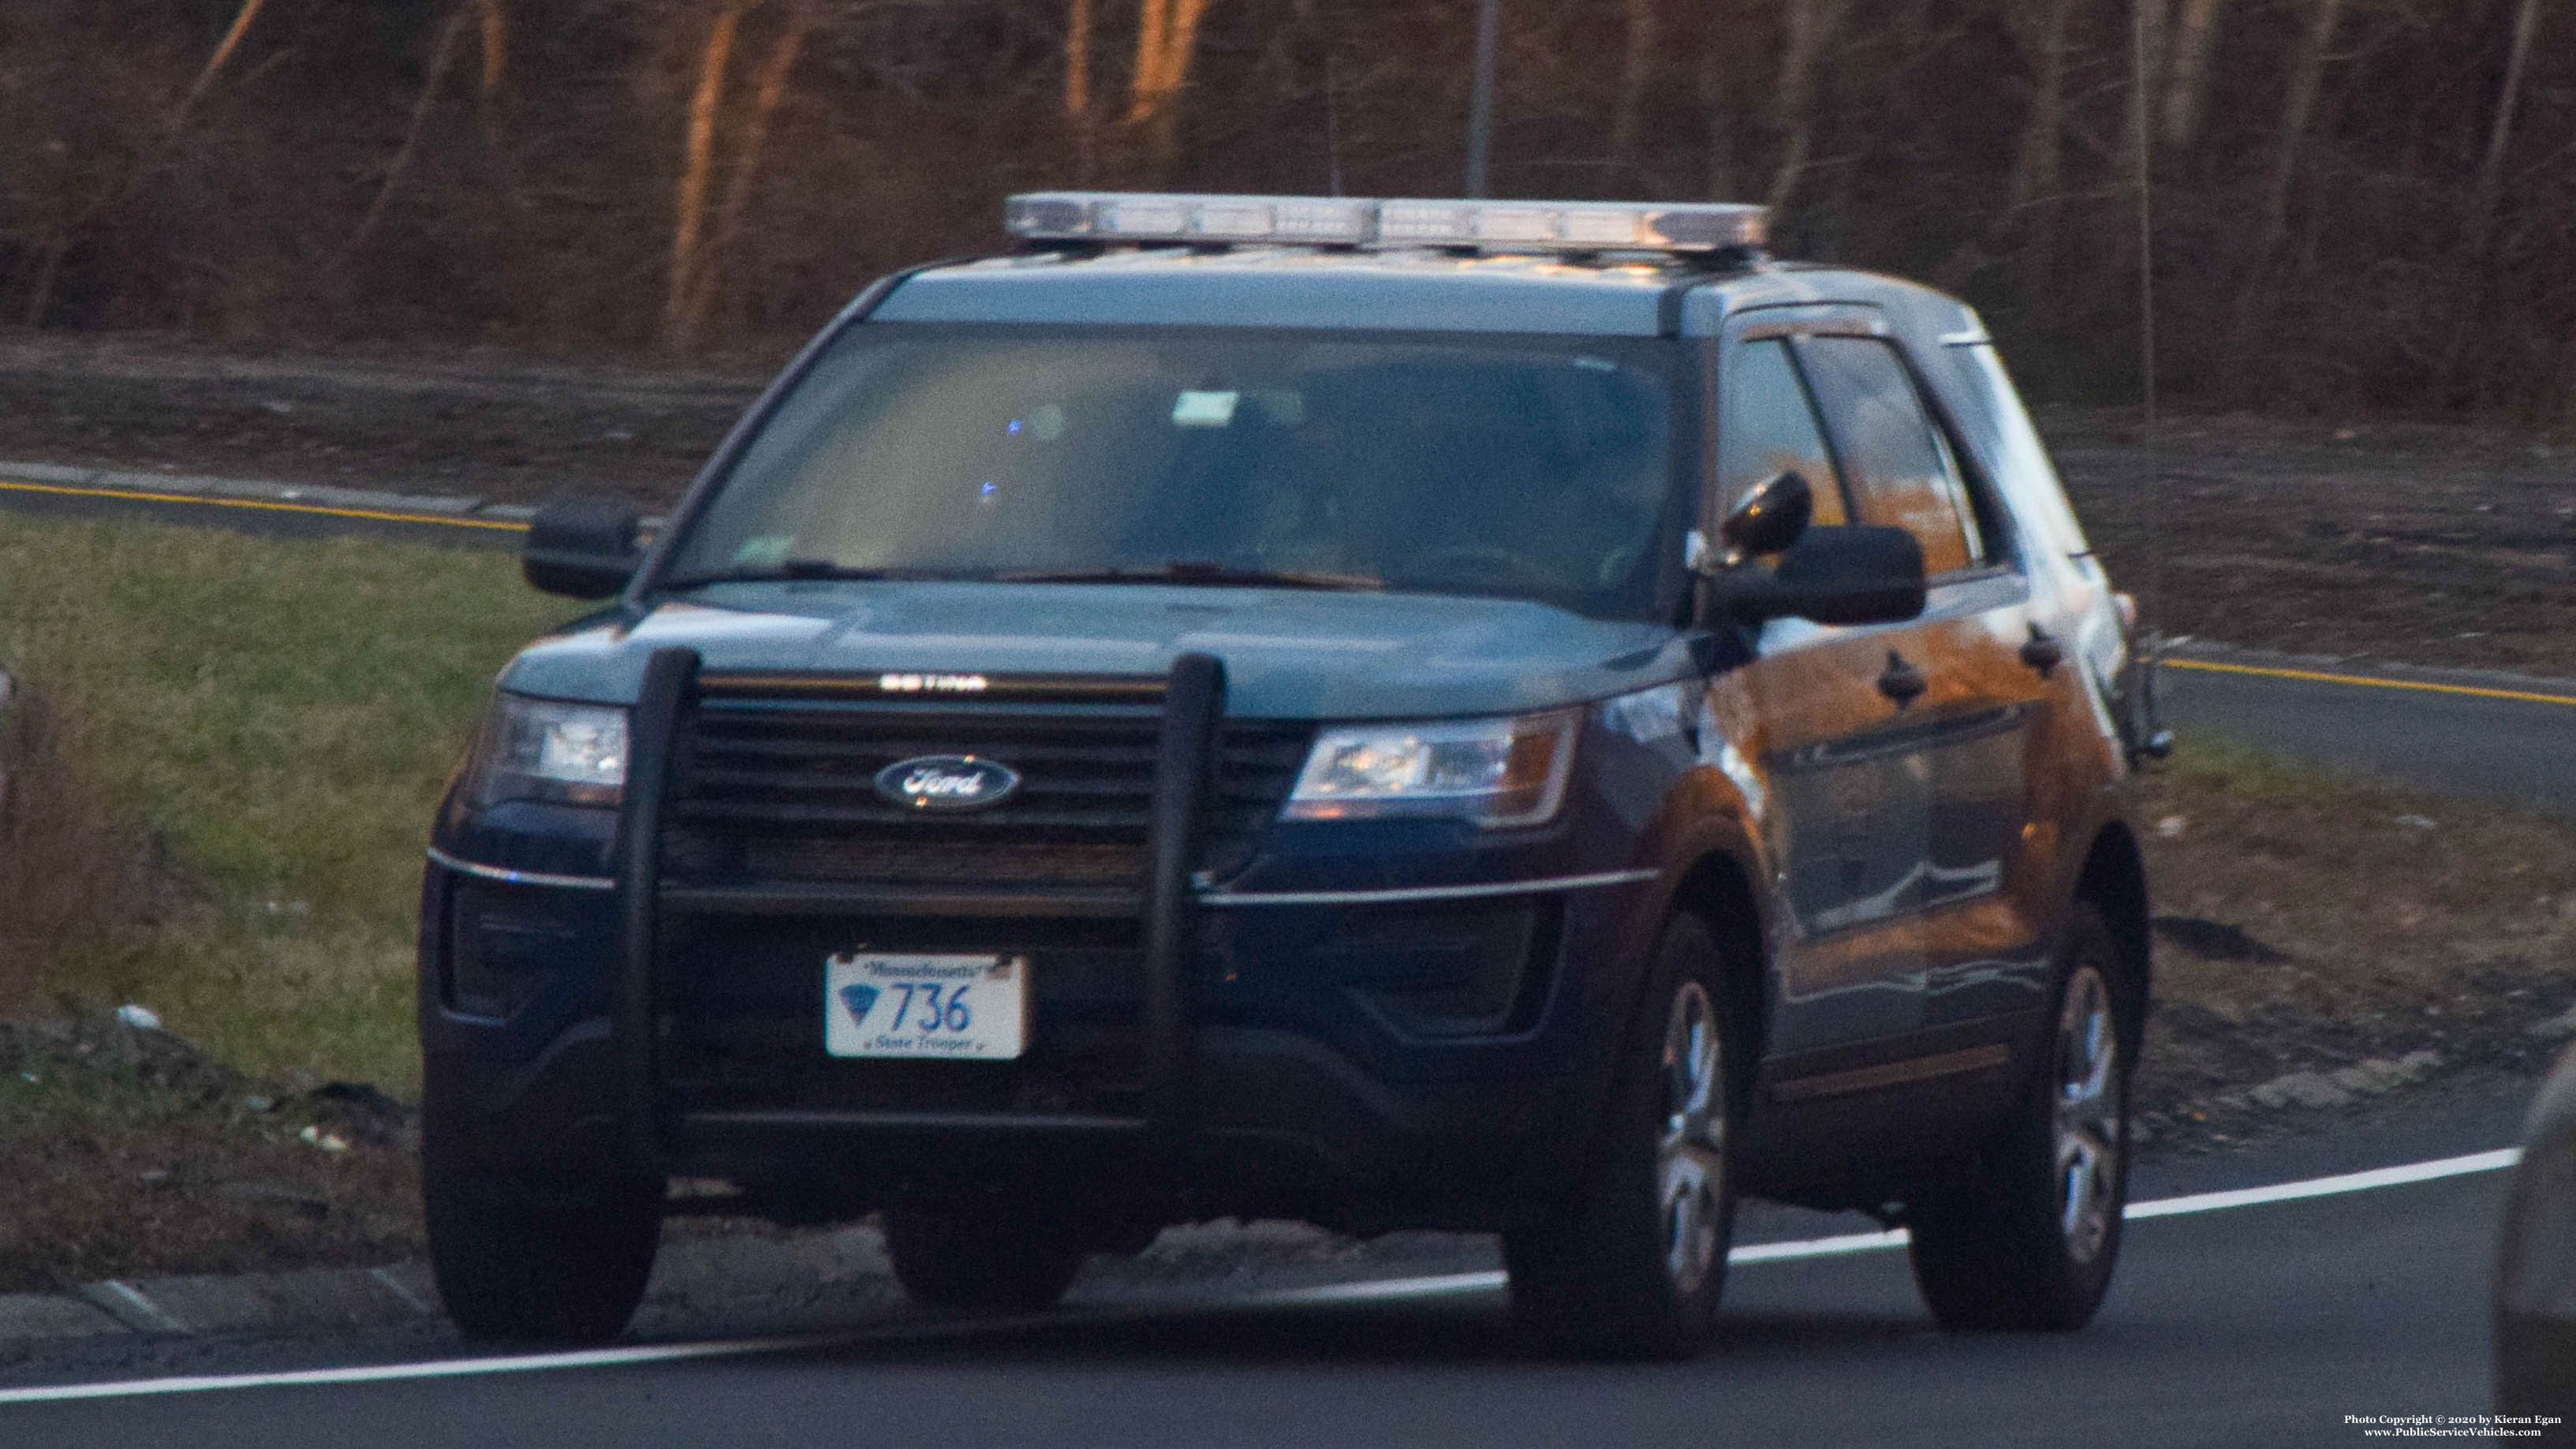 A photo  of Massachusetts State Police
            Cruiser 736, a 2019 Ford Police Interceptor Utility             taken by Kieran Egan